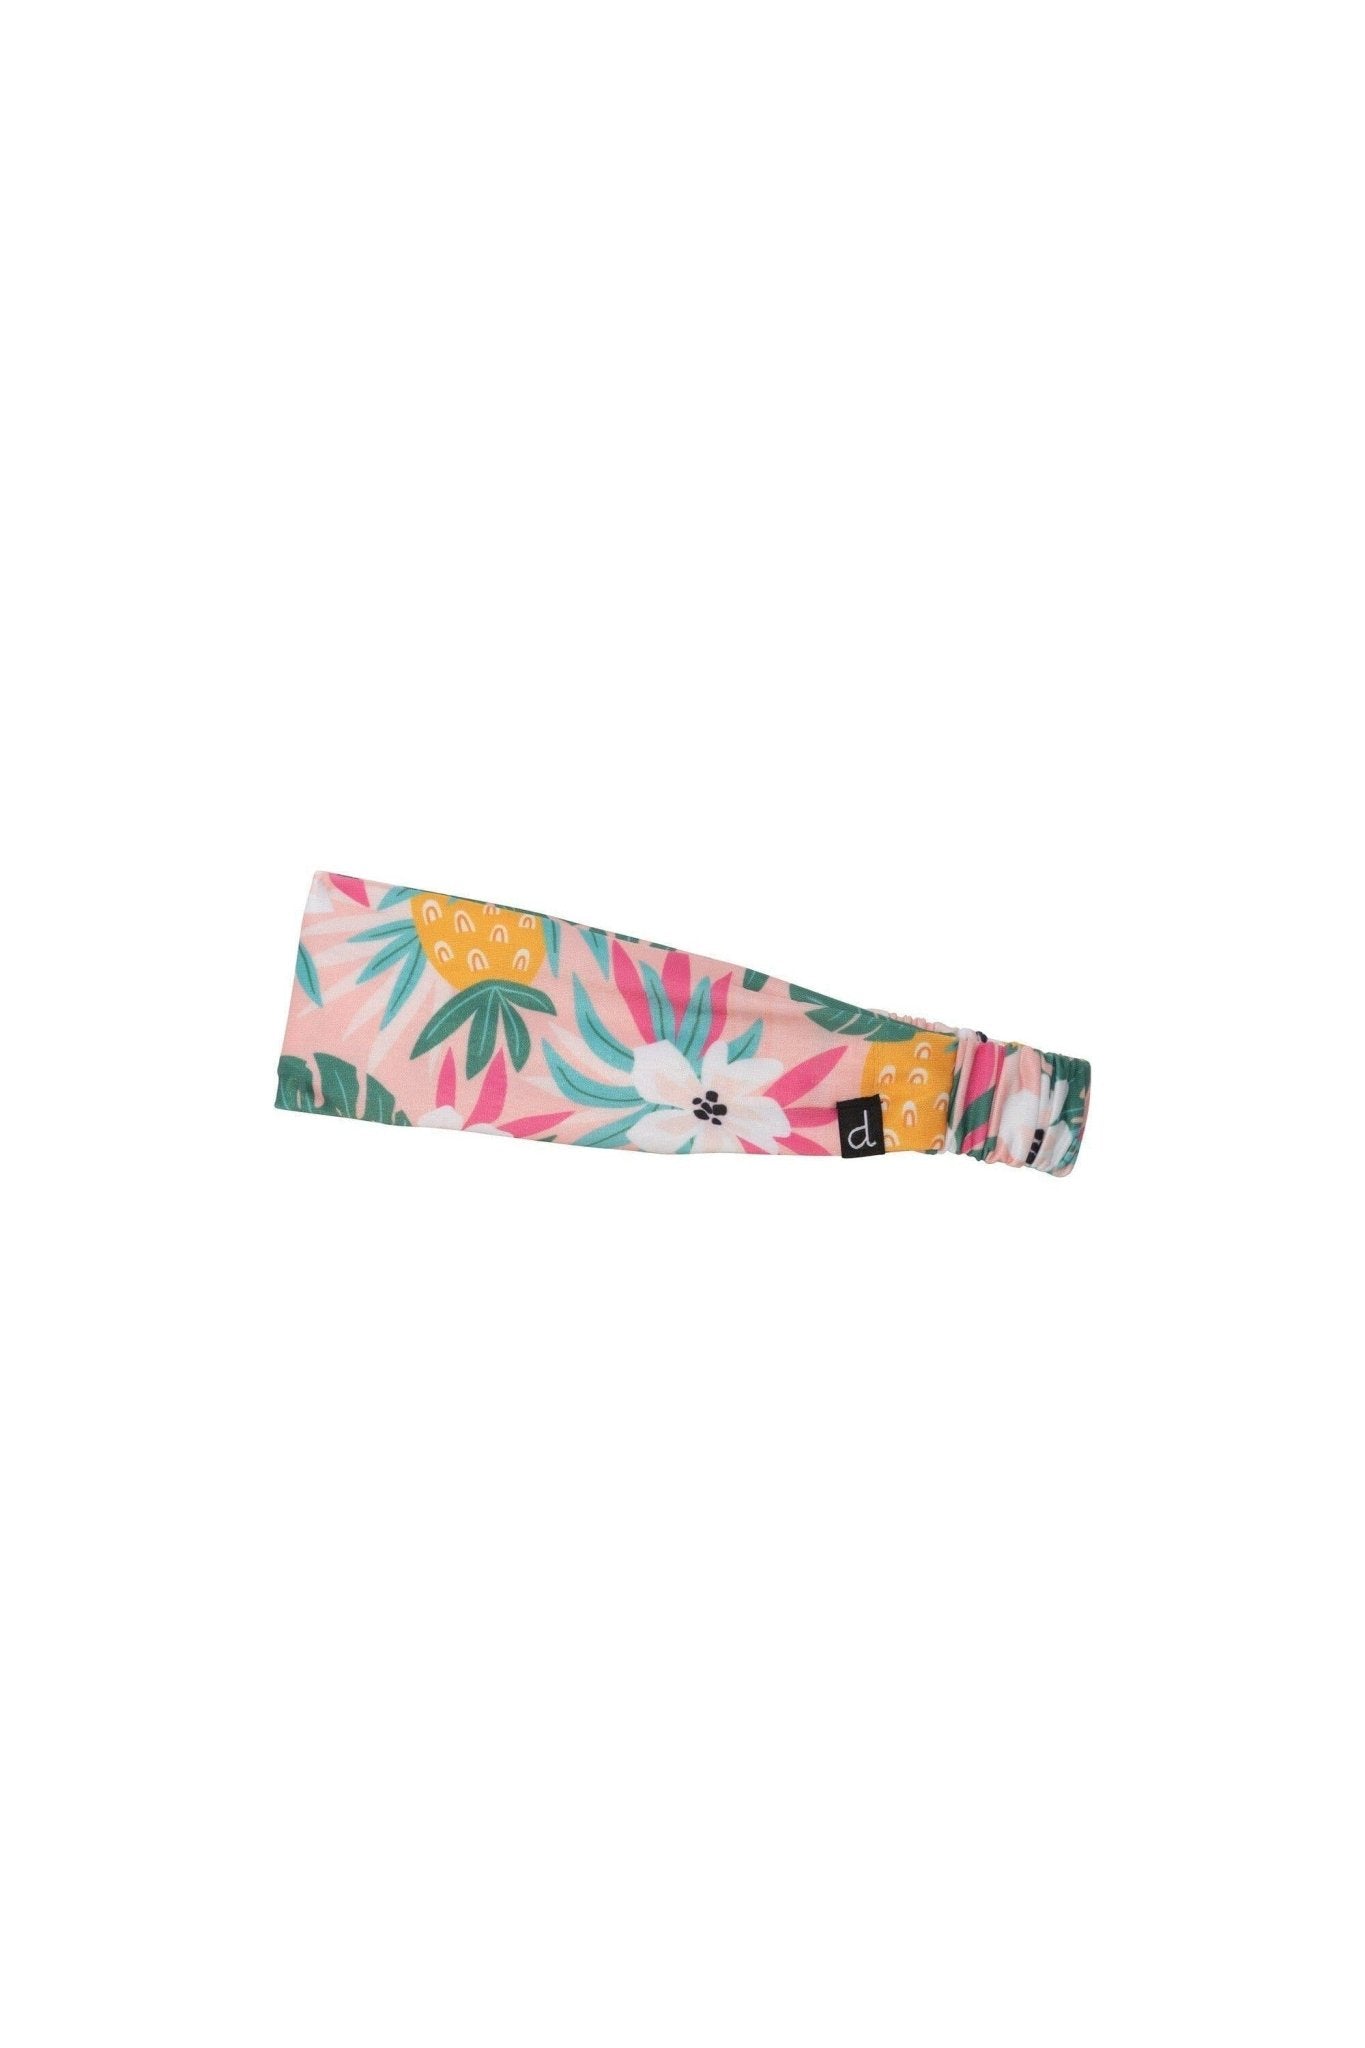 Printed Swimwear Headband Light Pink Tropical Flowers - Mack & Harvie